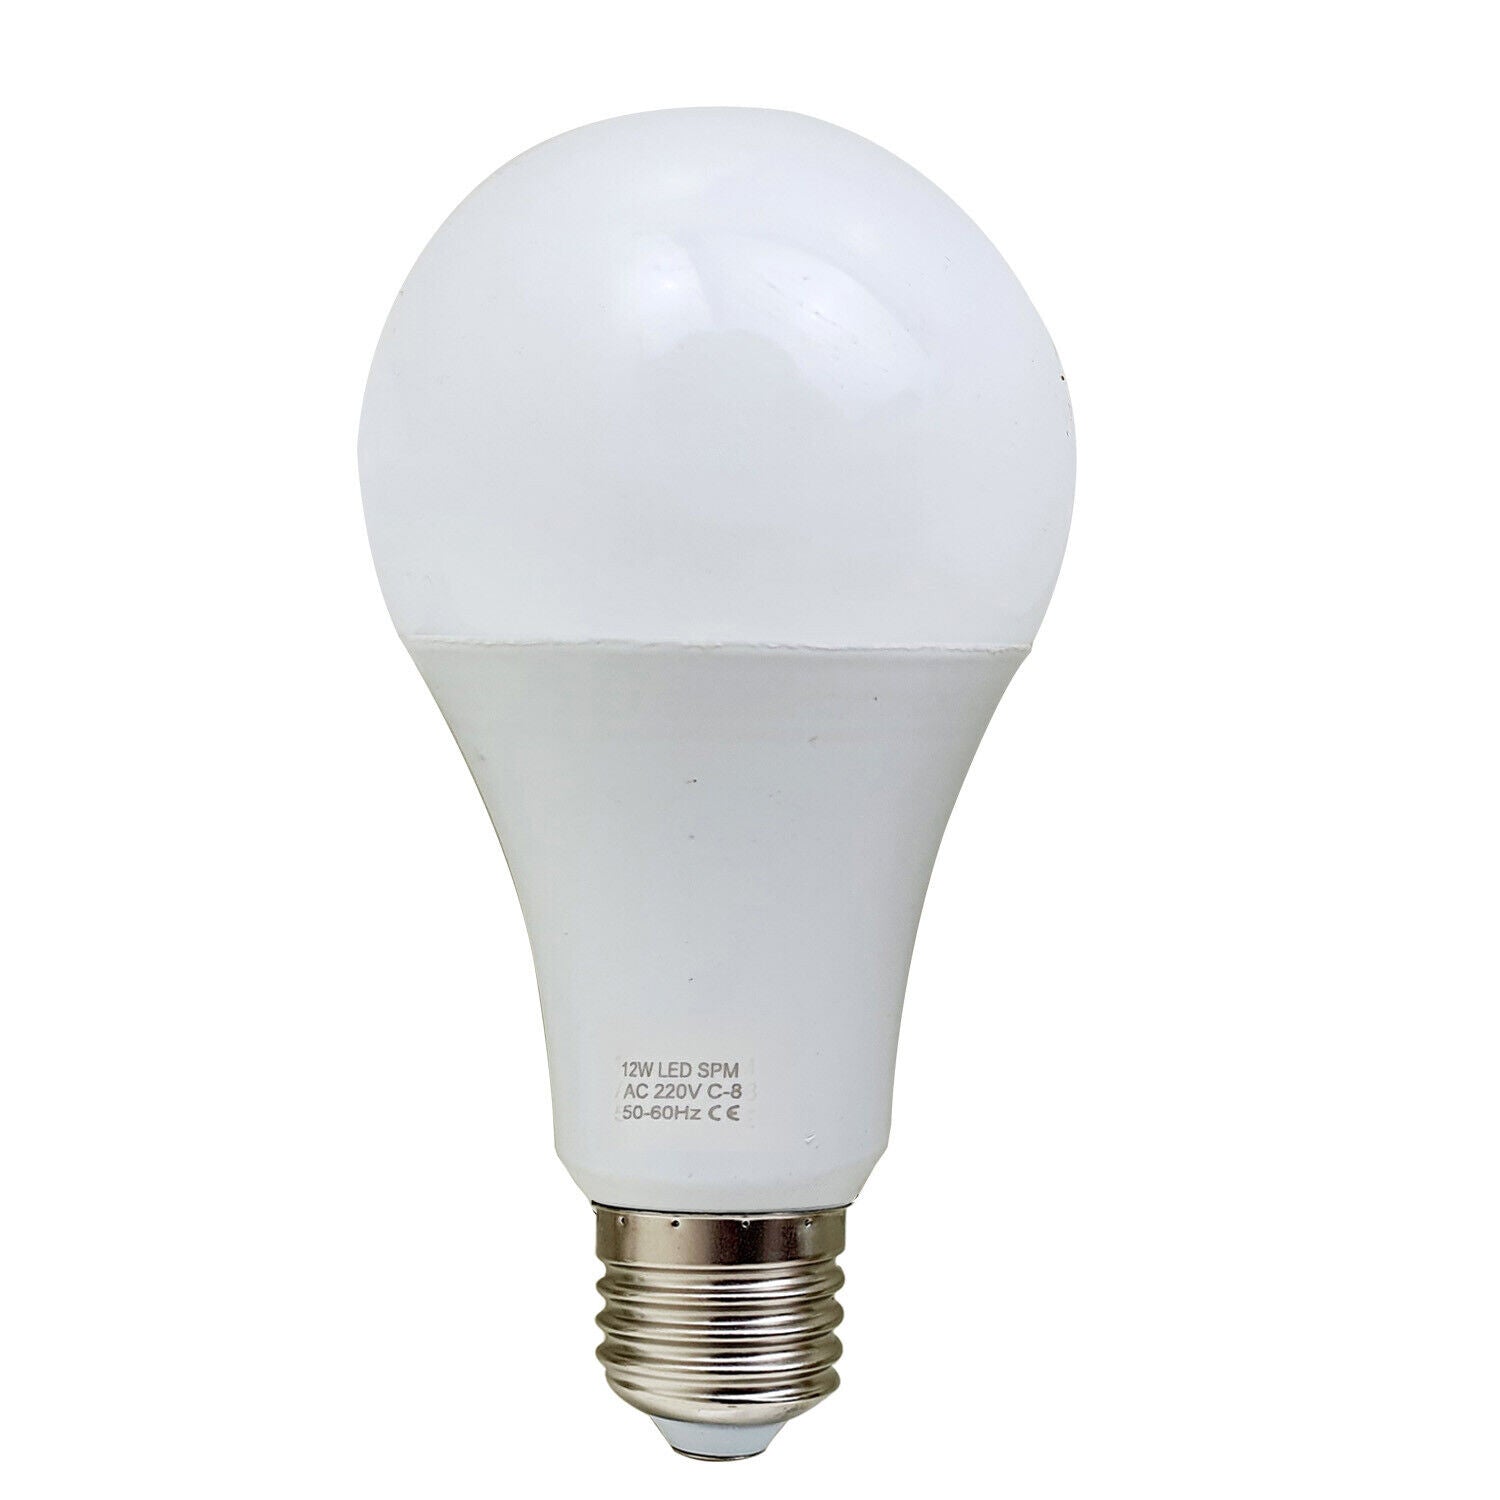 E27 12 W energiesparende warmweiße LED-Glühbirnen A60 E27 Schraubbirnen, nicht dimmbar